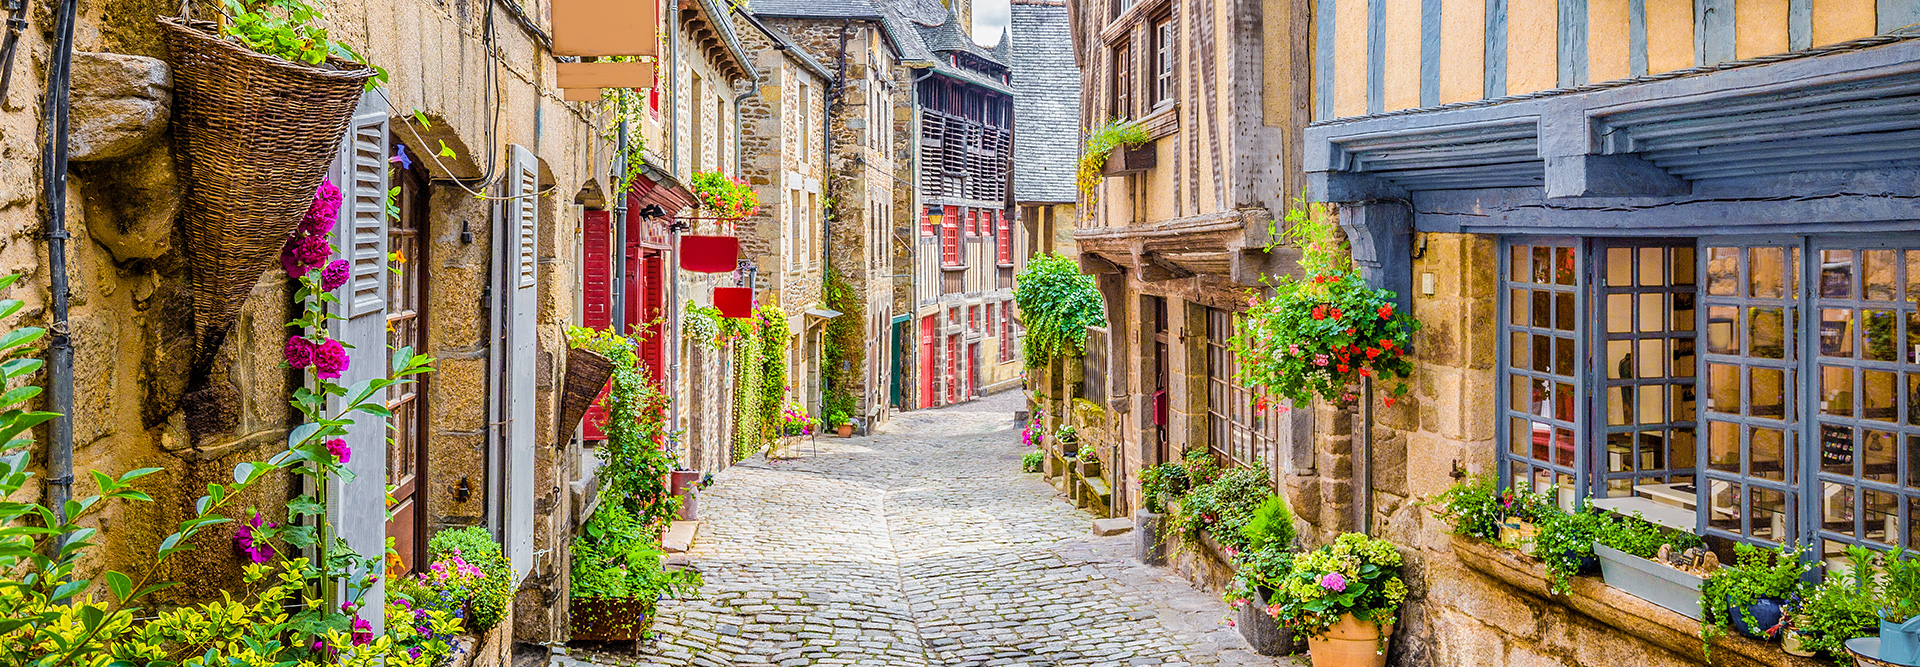 Cobblestone Street in France, Europe